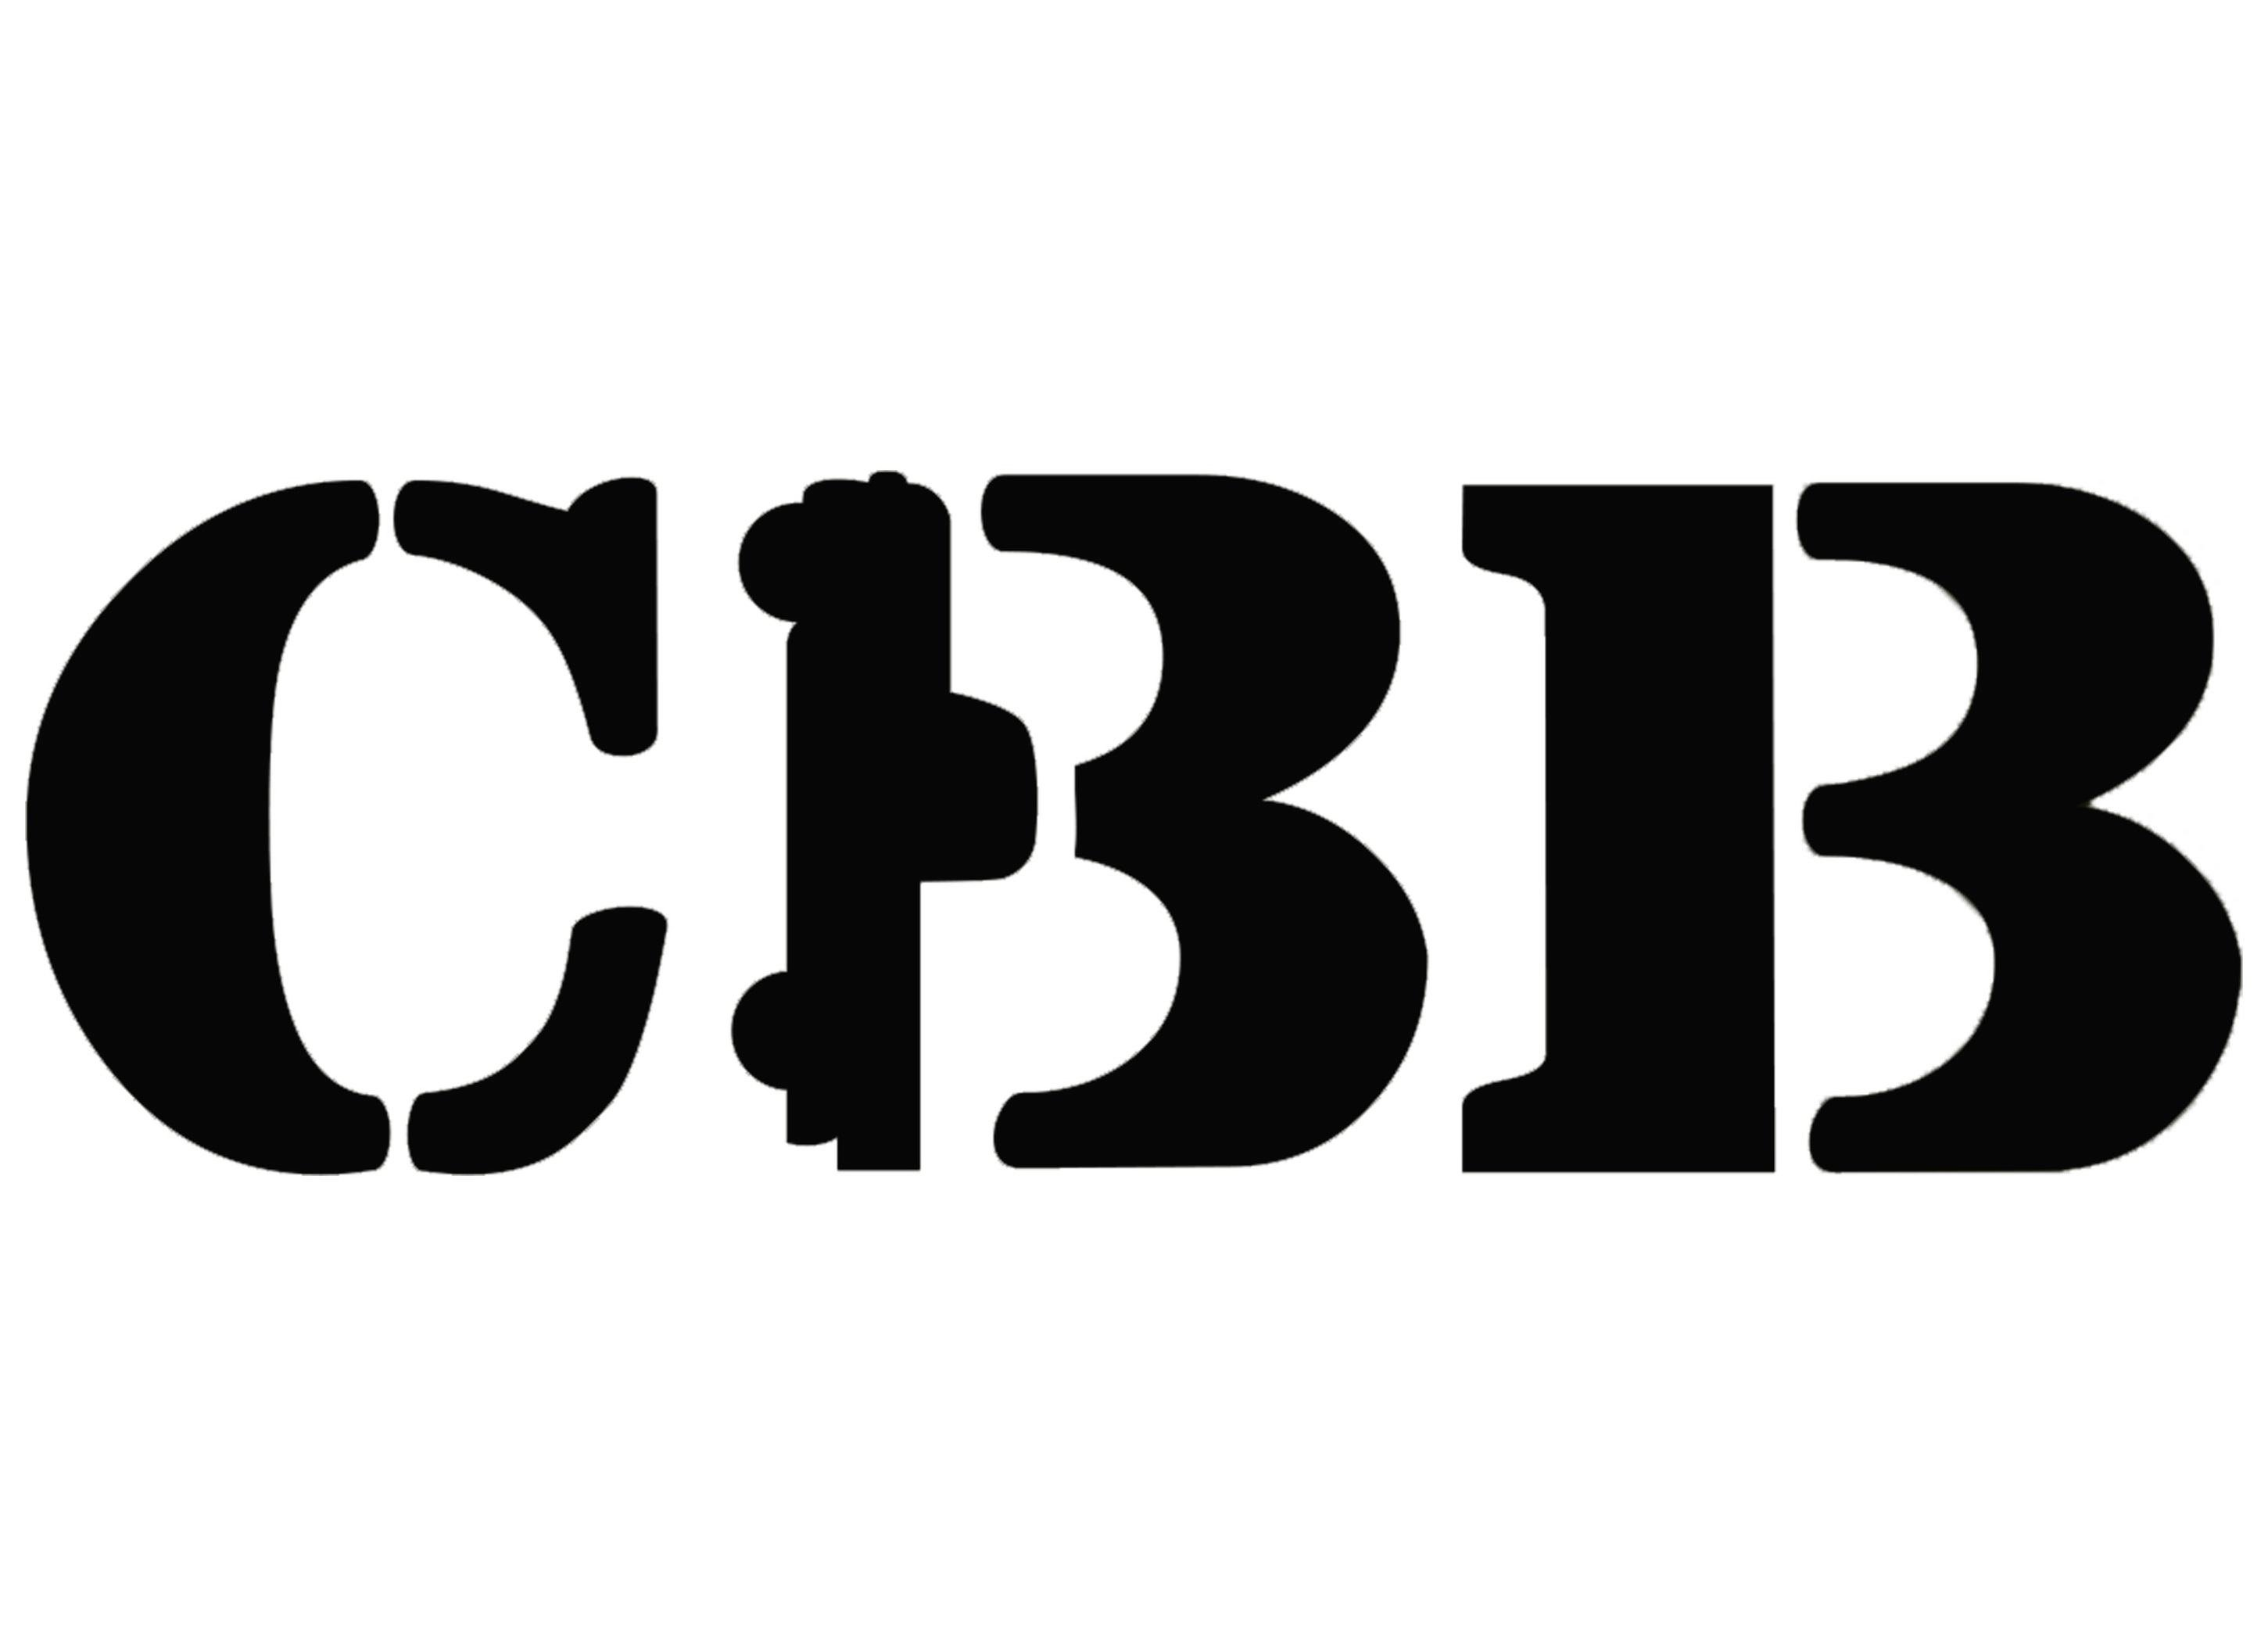 CBB - Country Boy Brewing, L.L.C. Trademark Registration